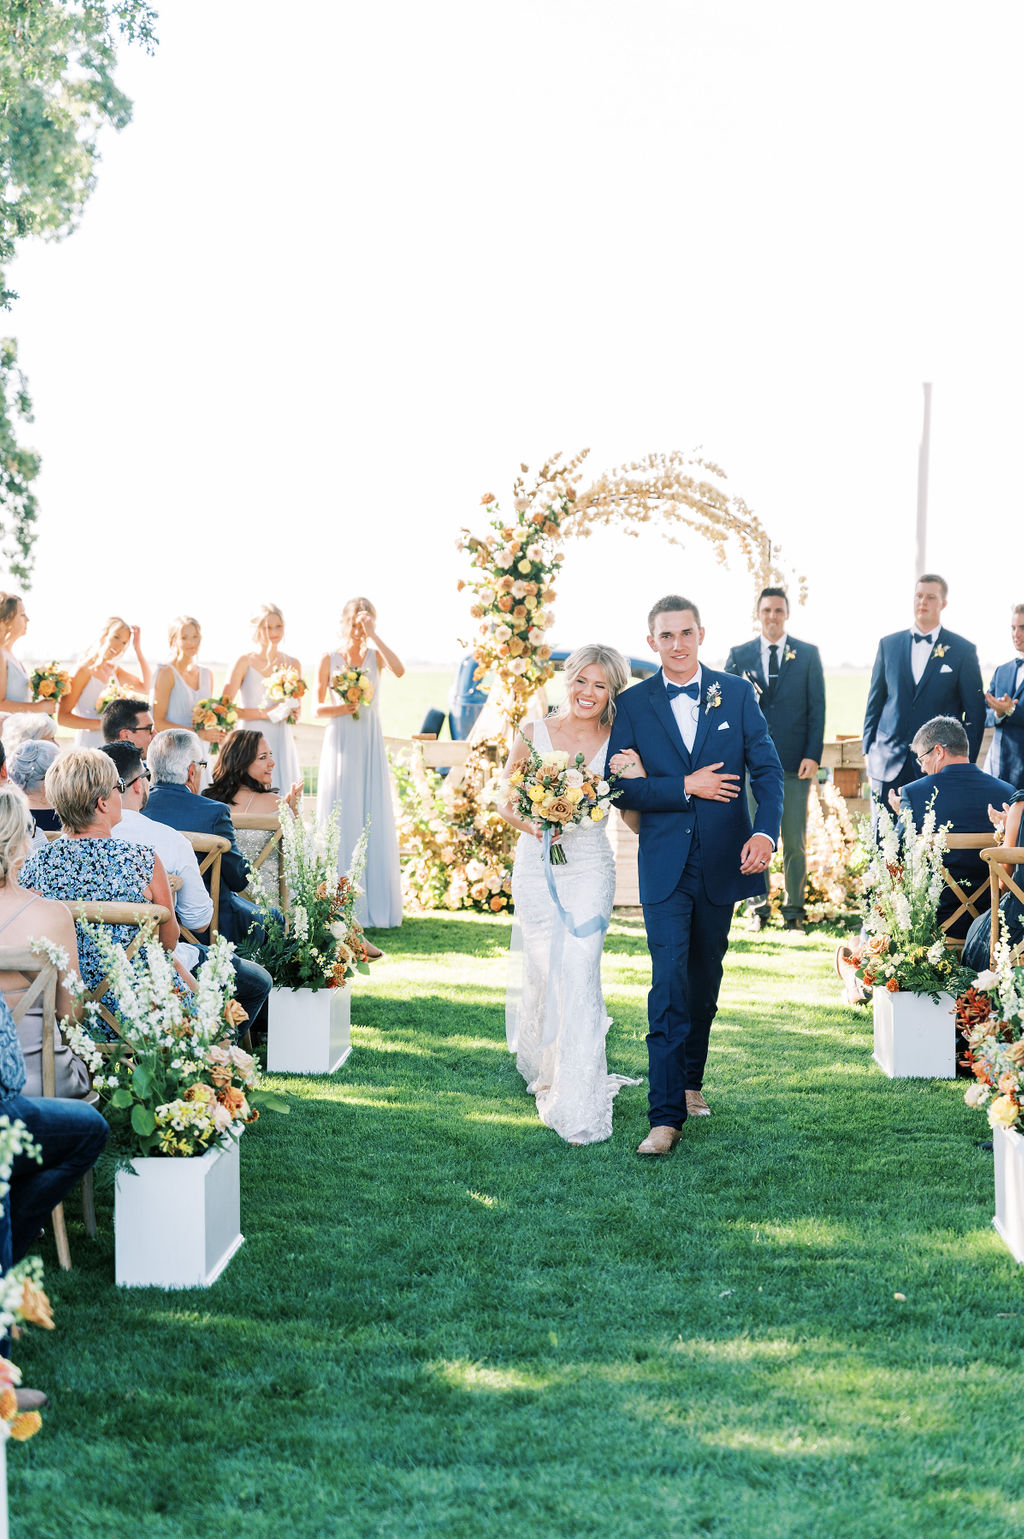 aisle, married, bouquet, bride, groom, dress